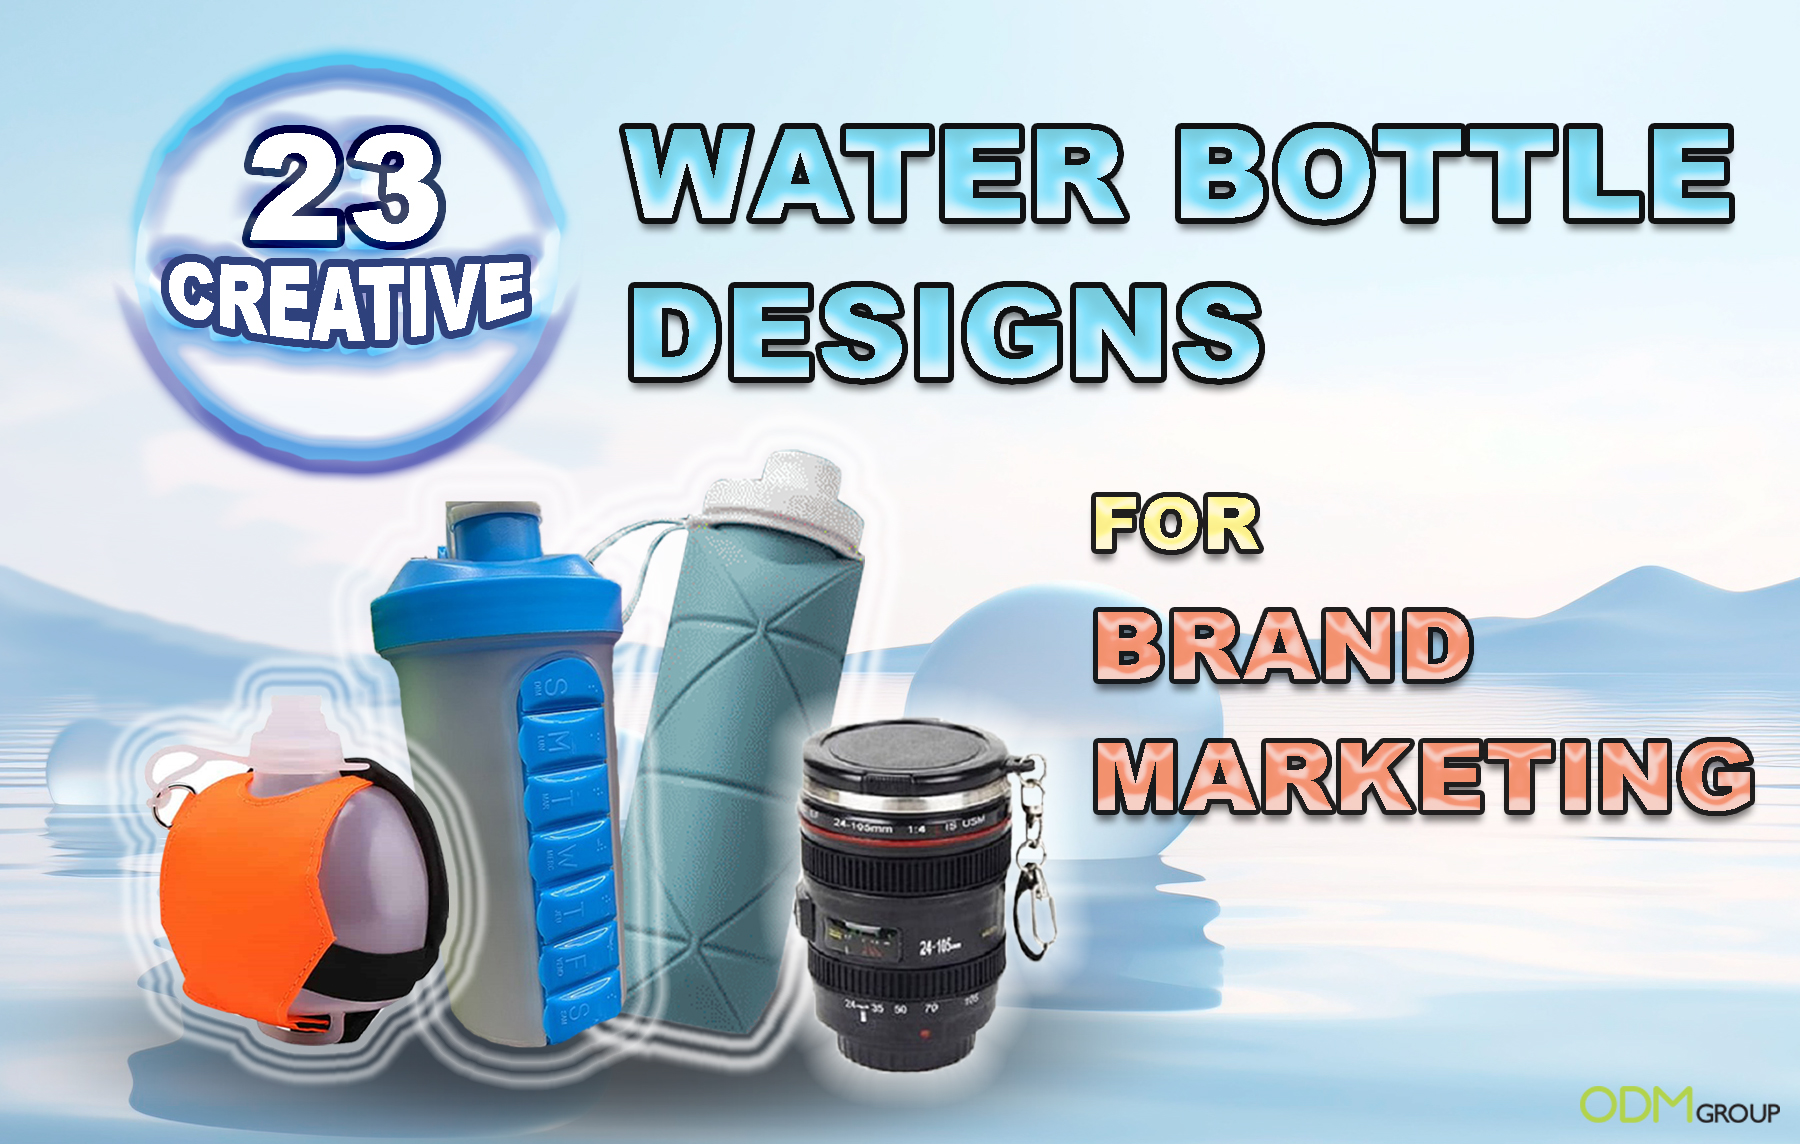 https://www.theodmgroup.com/wp-content/uploads/2022/05/Creative-Water-Bottle-Designs-1.jpg